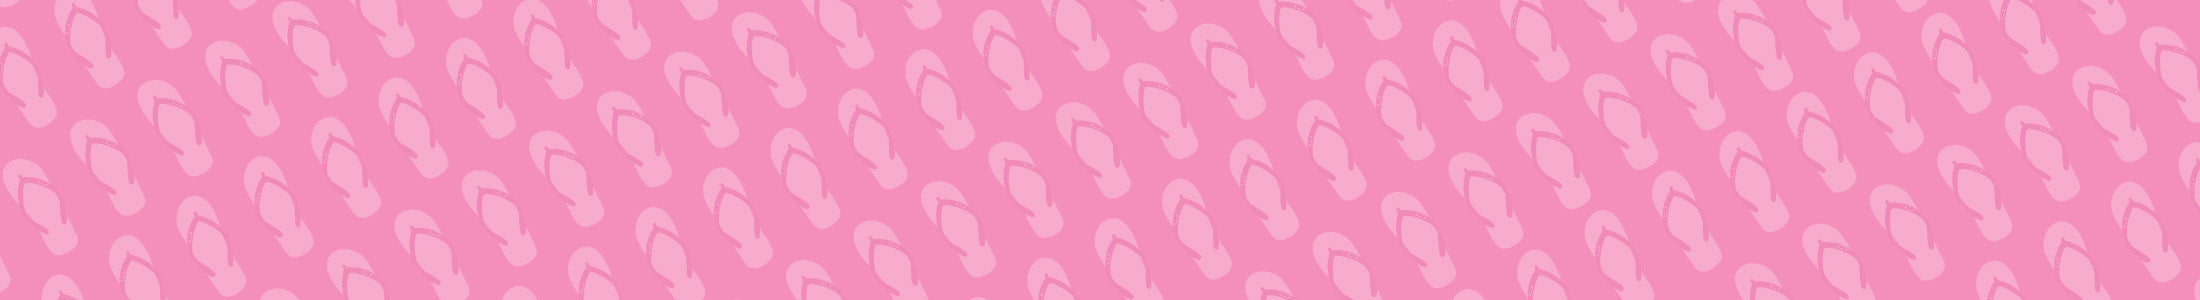 bg pink slippers